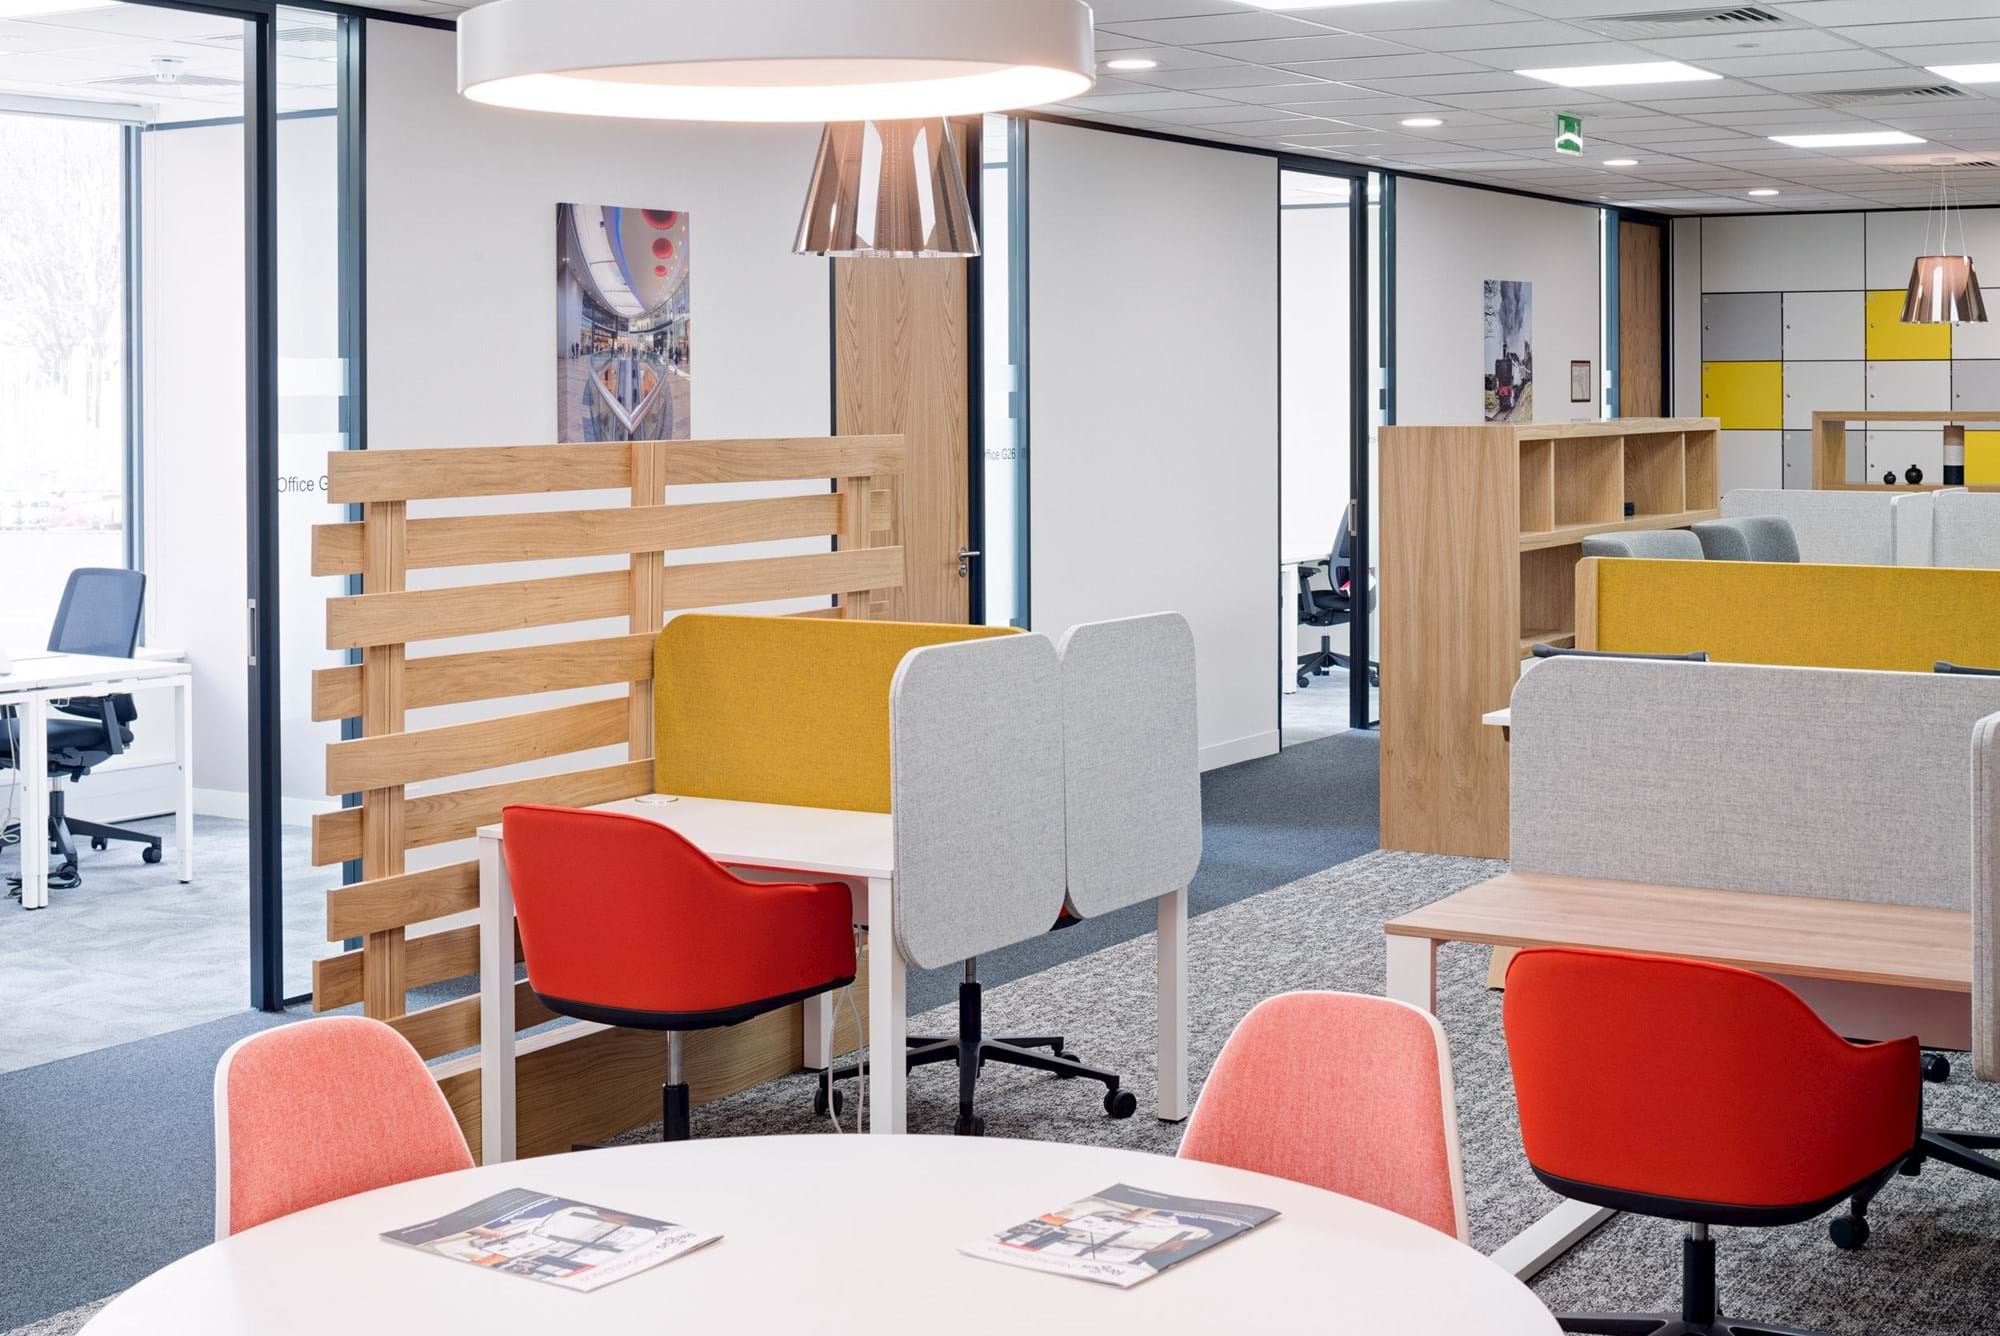 Modus Workspace office design, fit out and refurbishment - Regus Ashford - Regus Ashford 04 highres sRGB.jpg